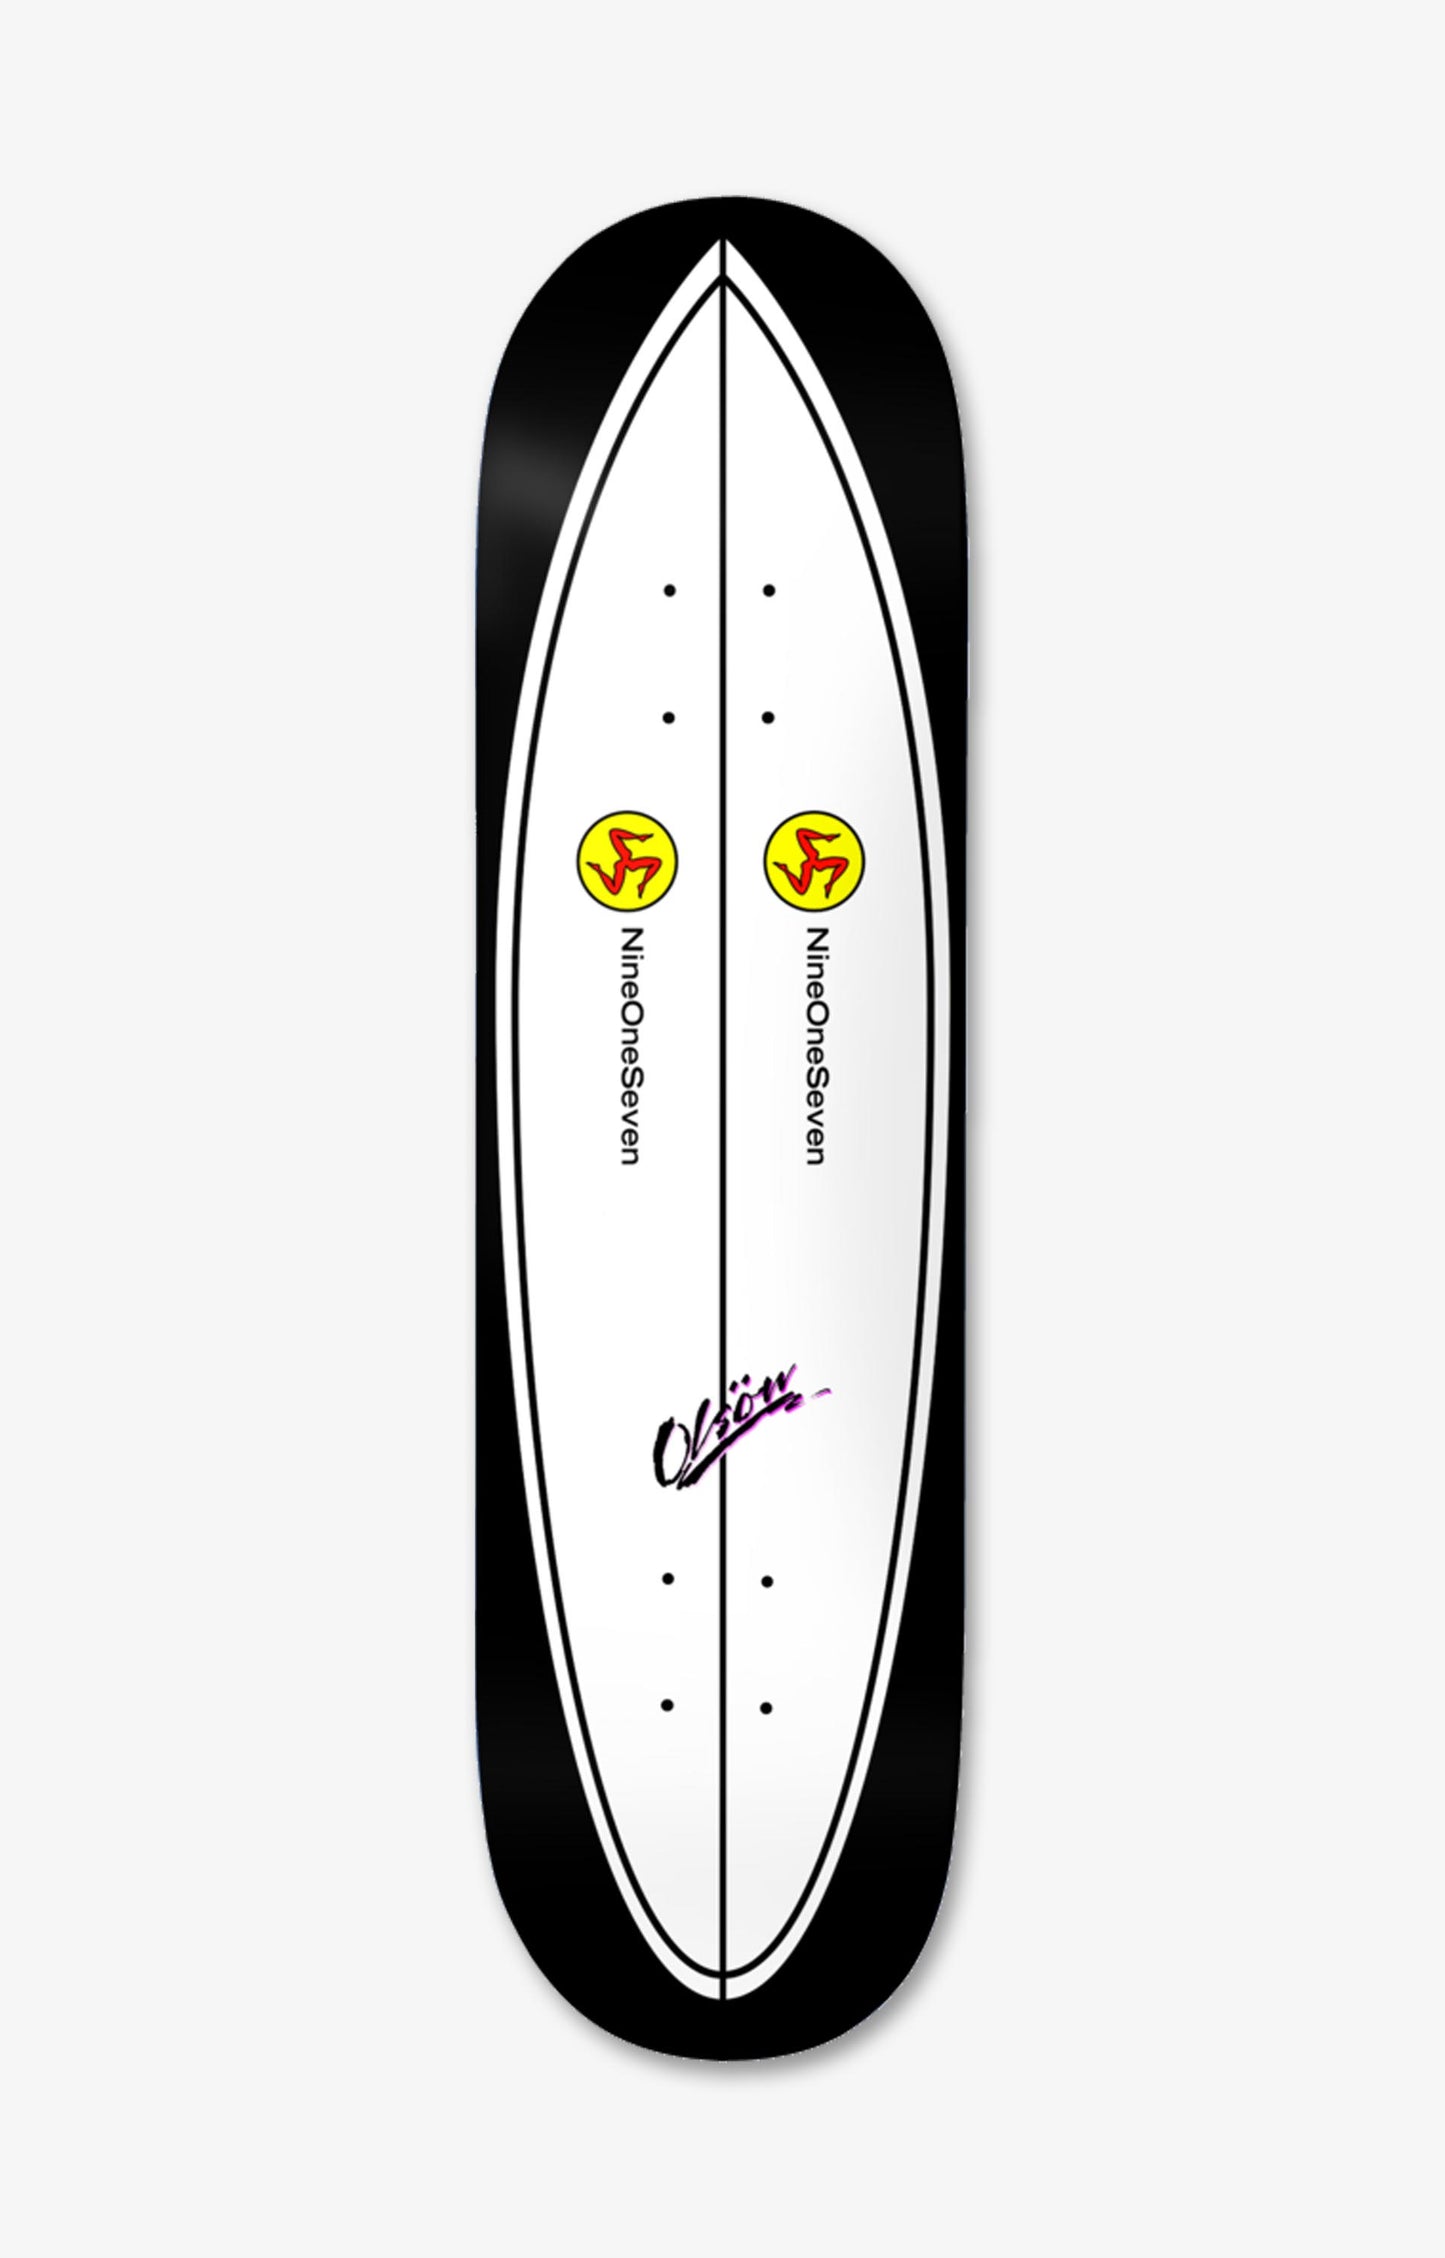 Call Me 917 Surf Skateboard Deck, 8.5